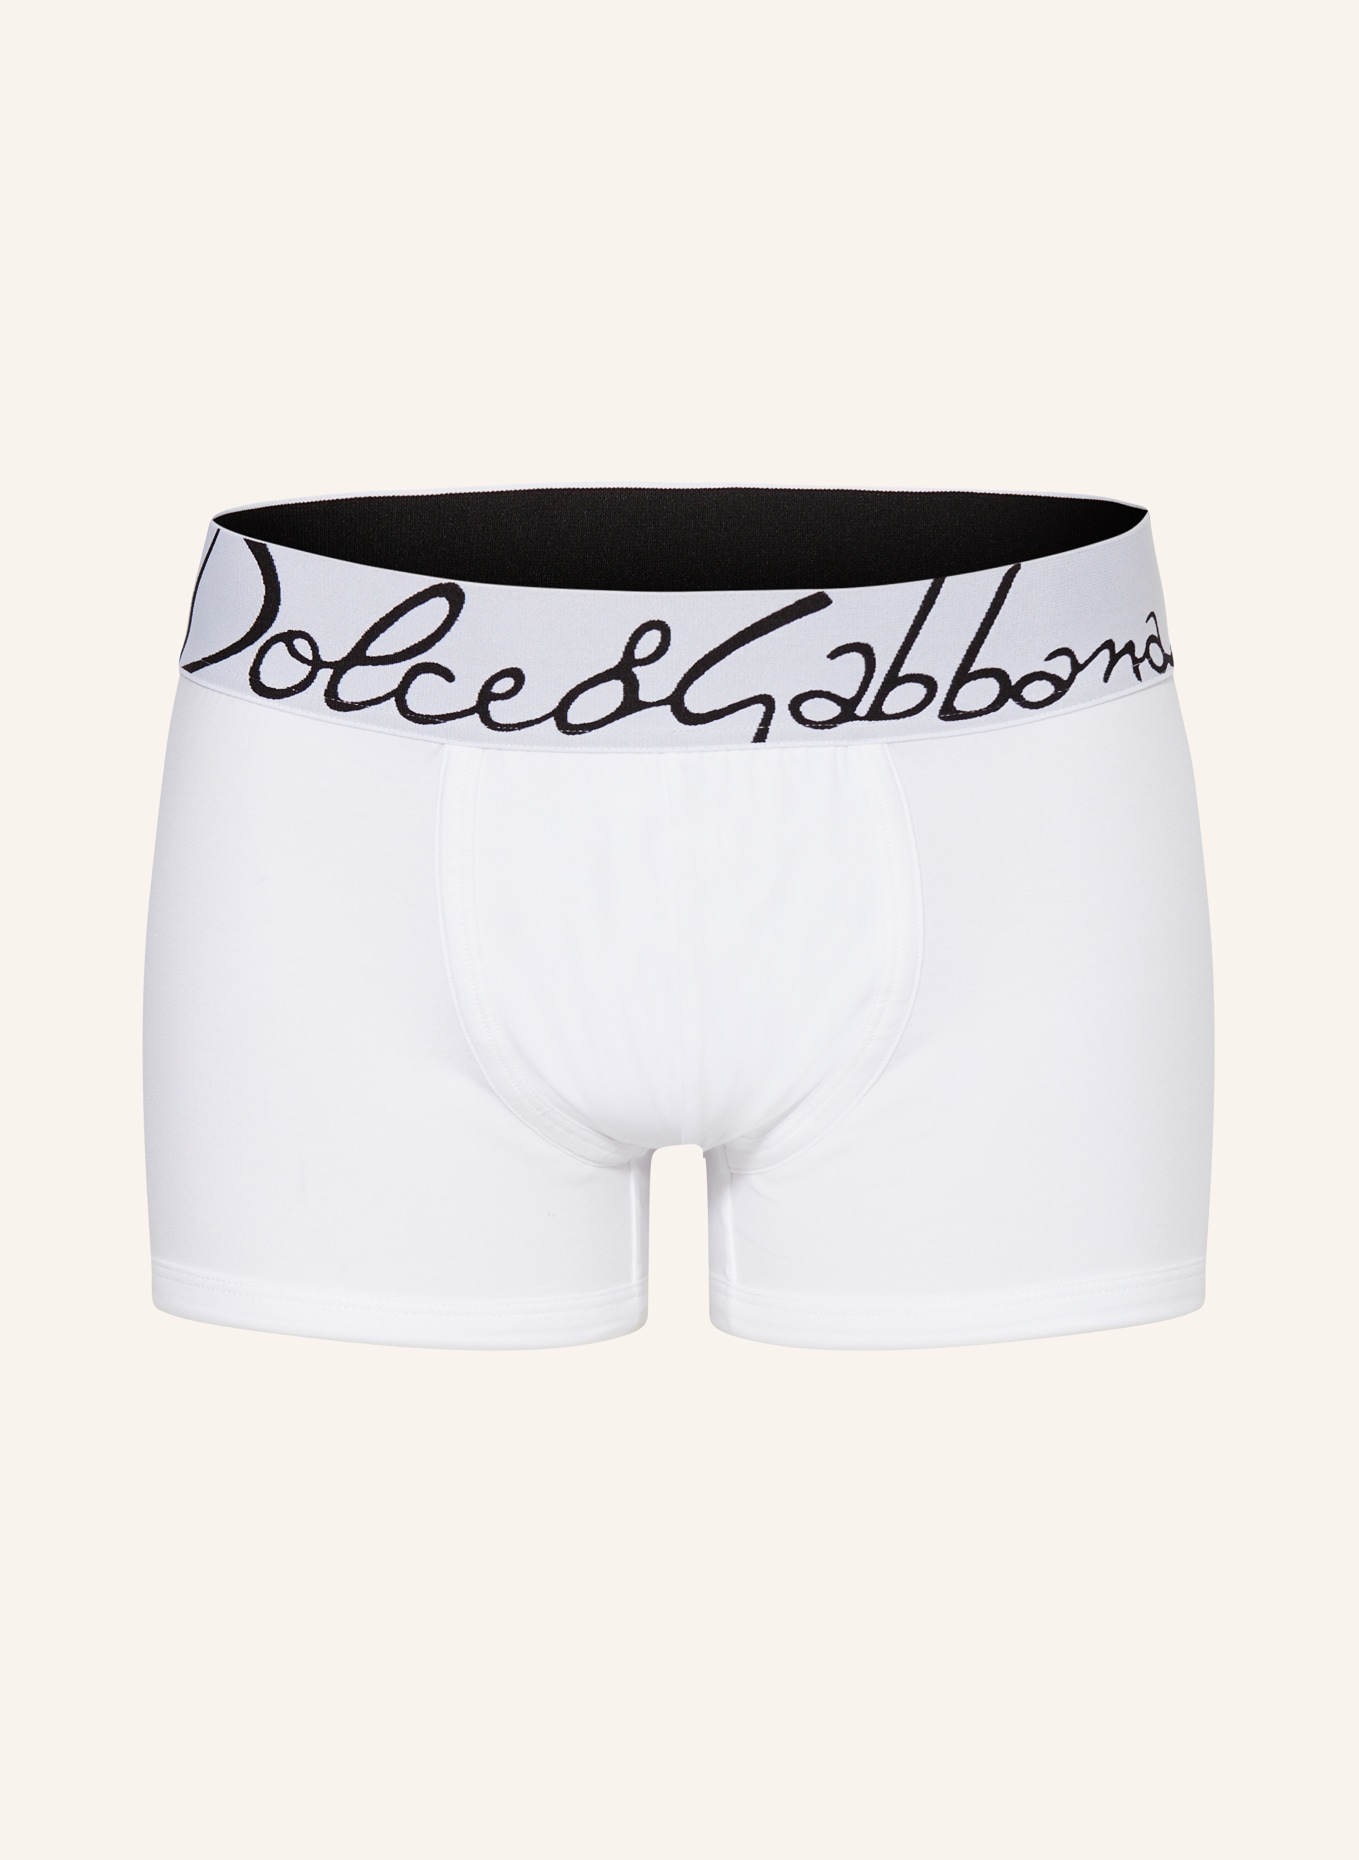 DOLCE & GABBANA Boxershorts, Farbe: WEISS (Bild 1)